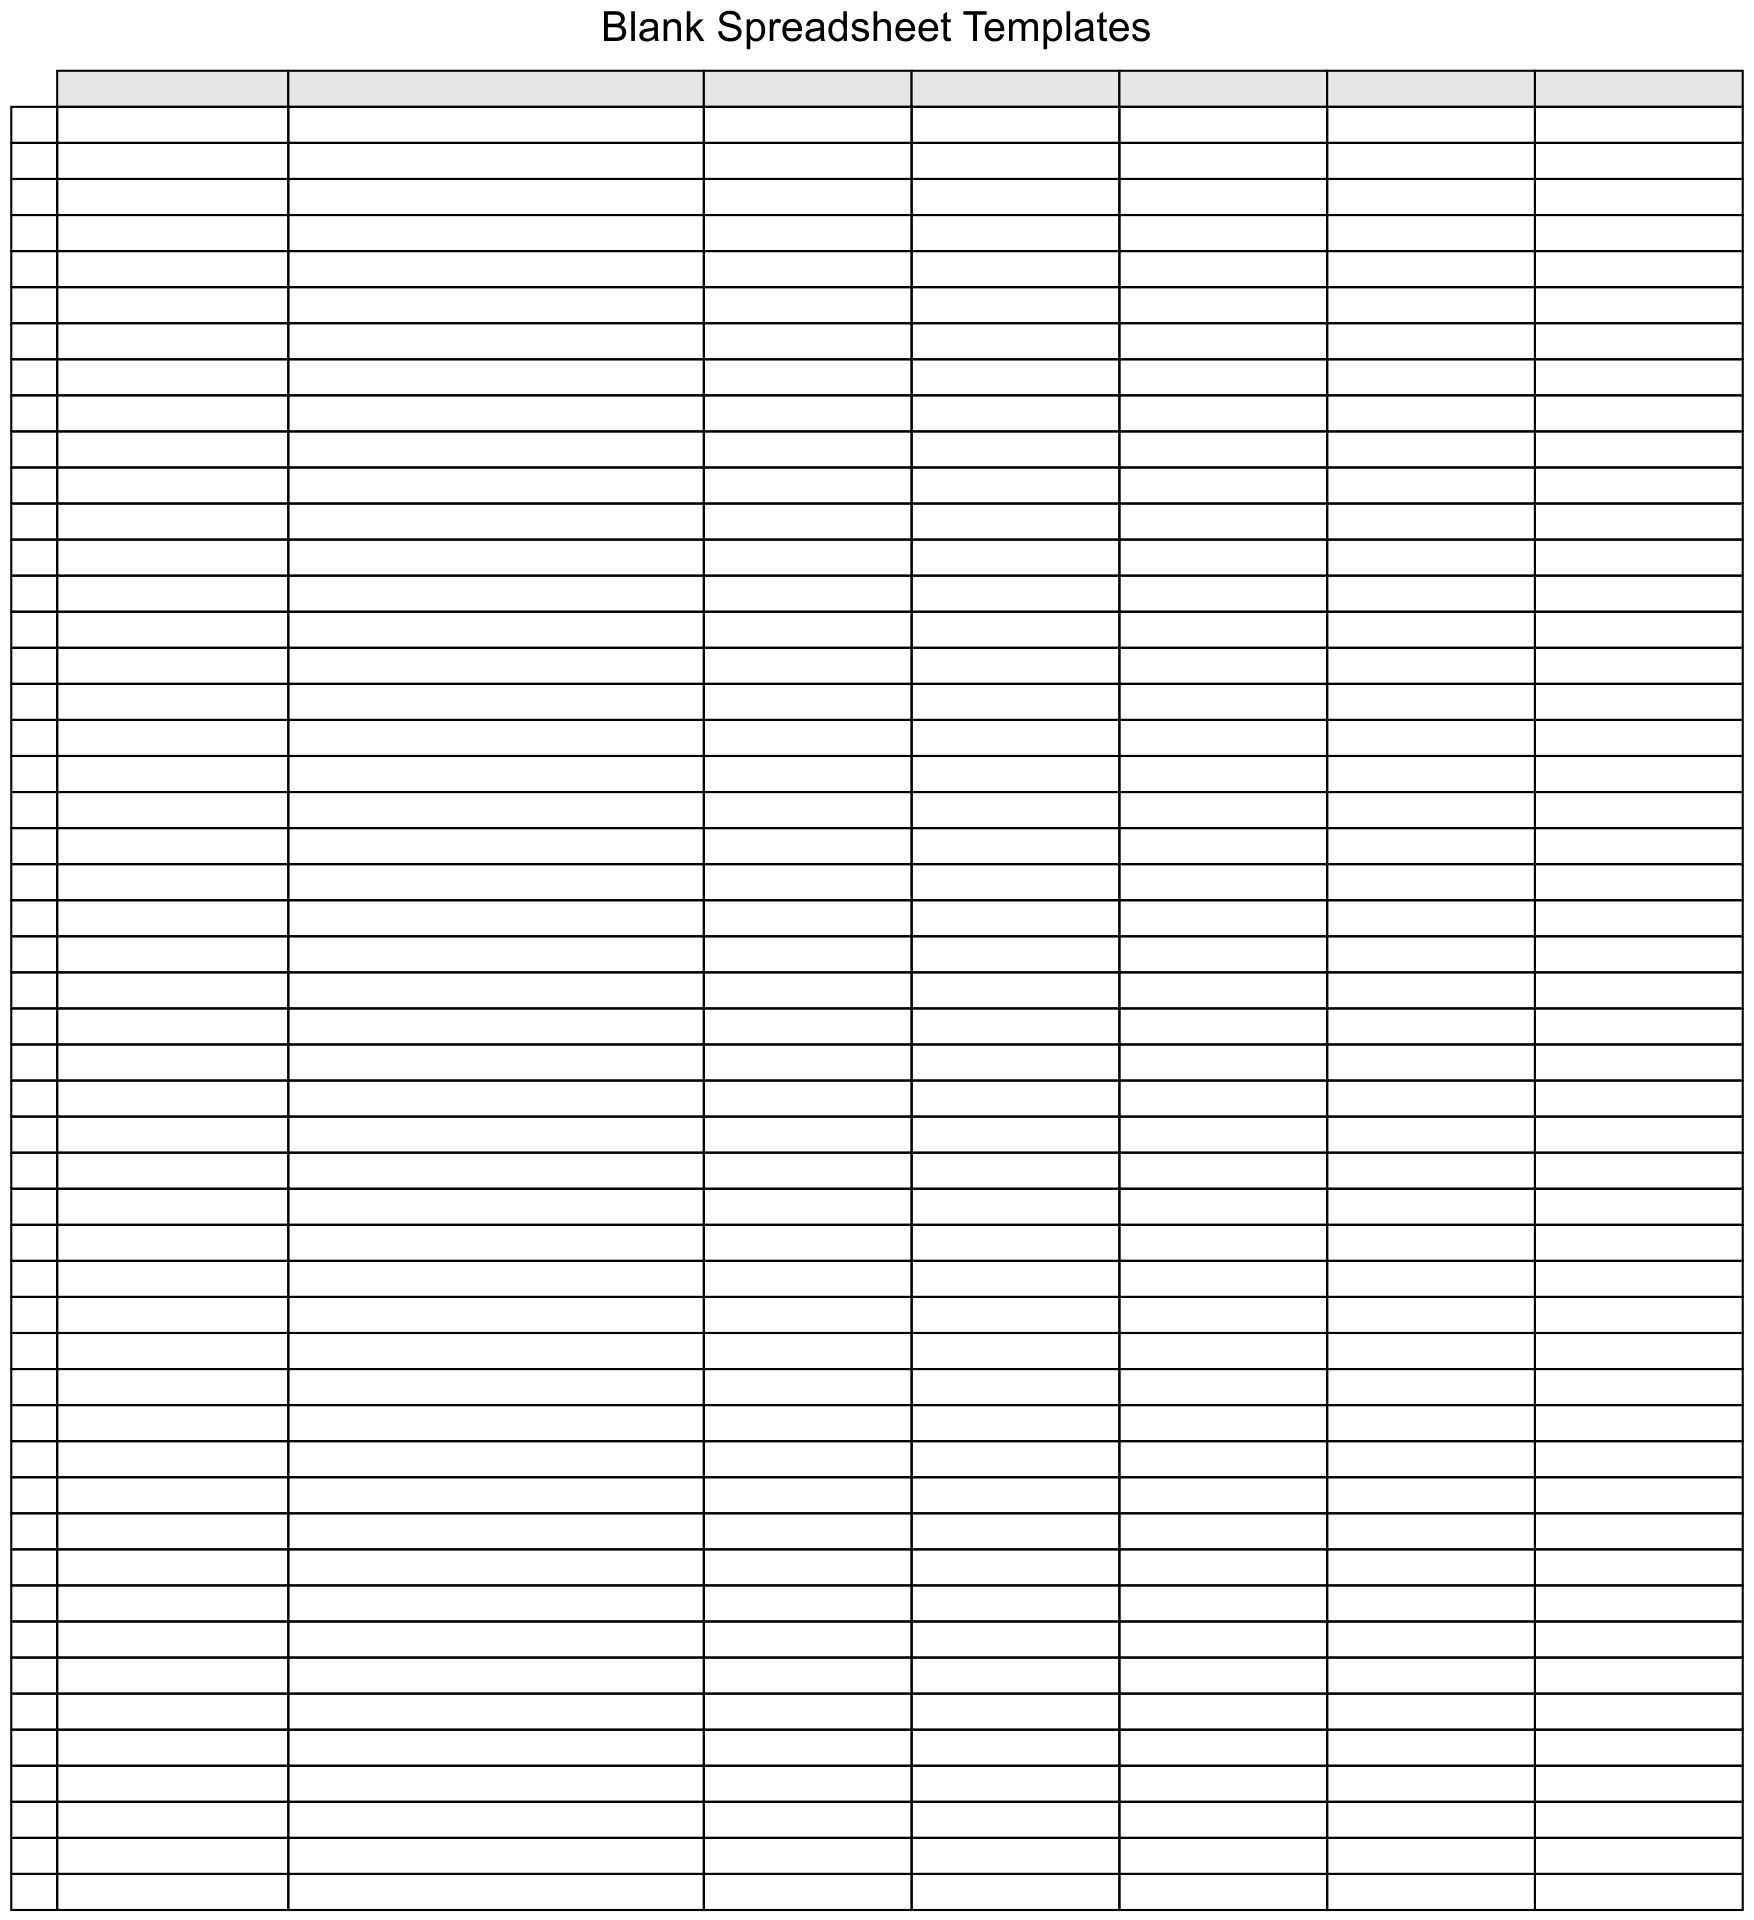 printable-downloadable-free-blank-spreadsheet-templates